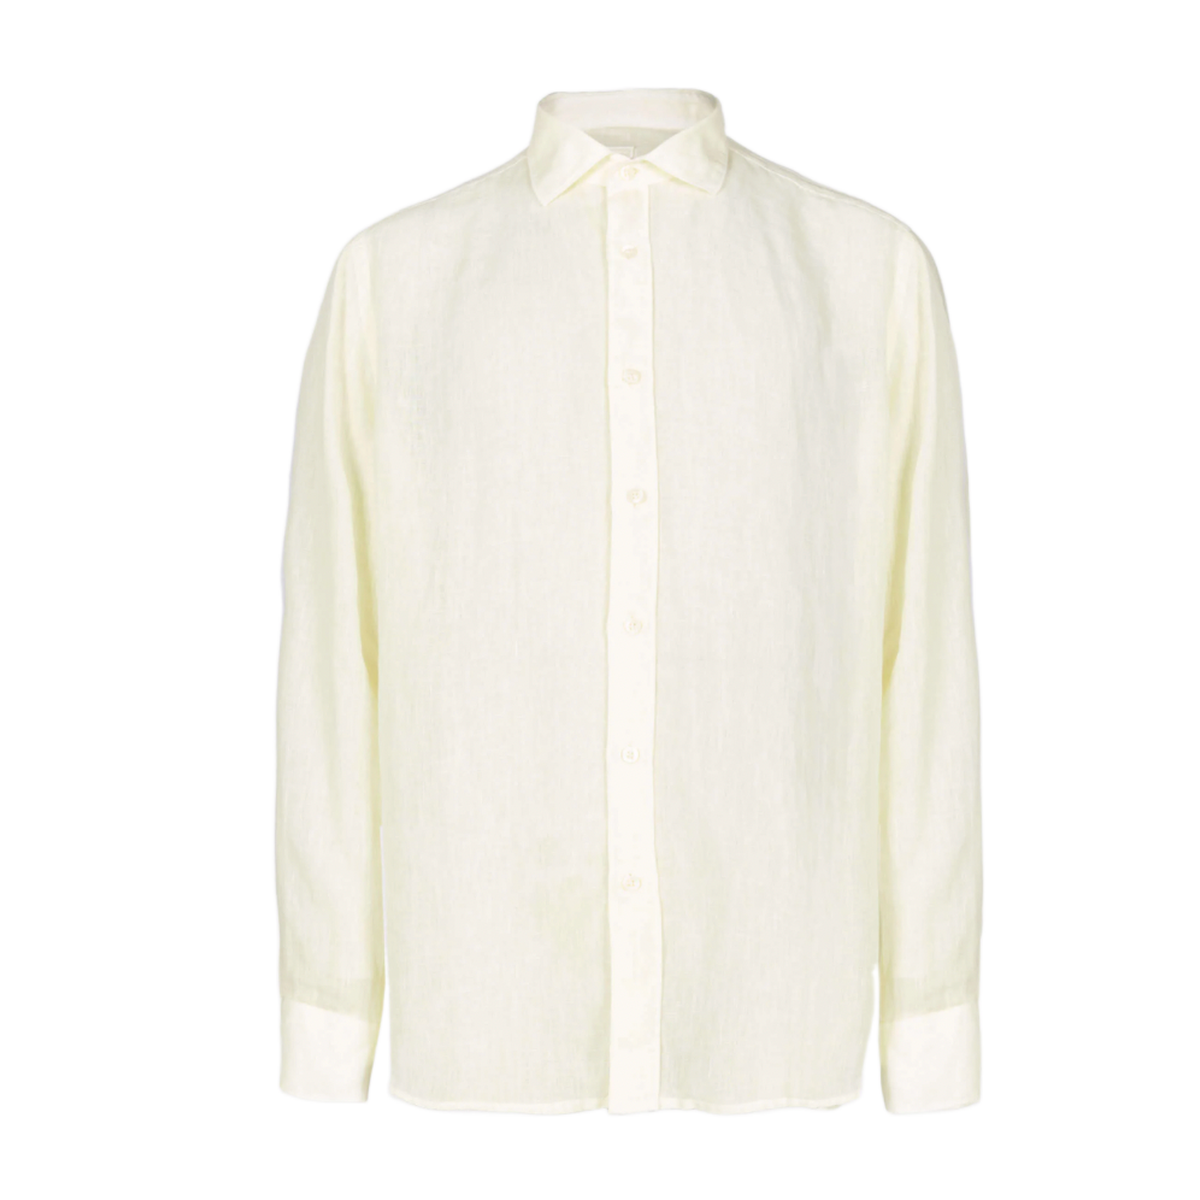 120% Lino Gazoz Soft Fade Button Shirt